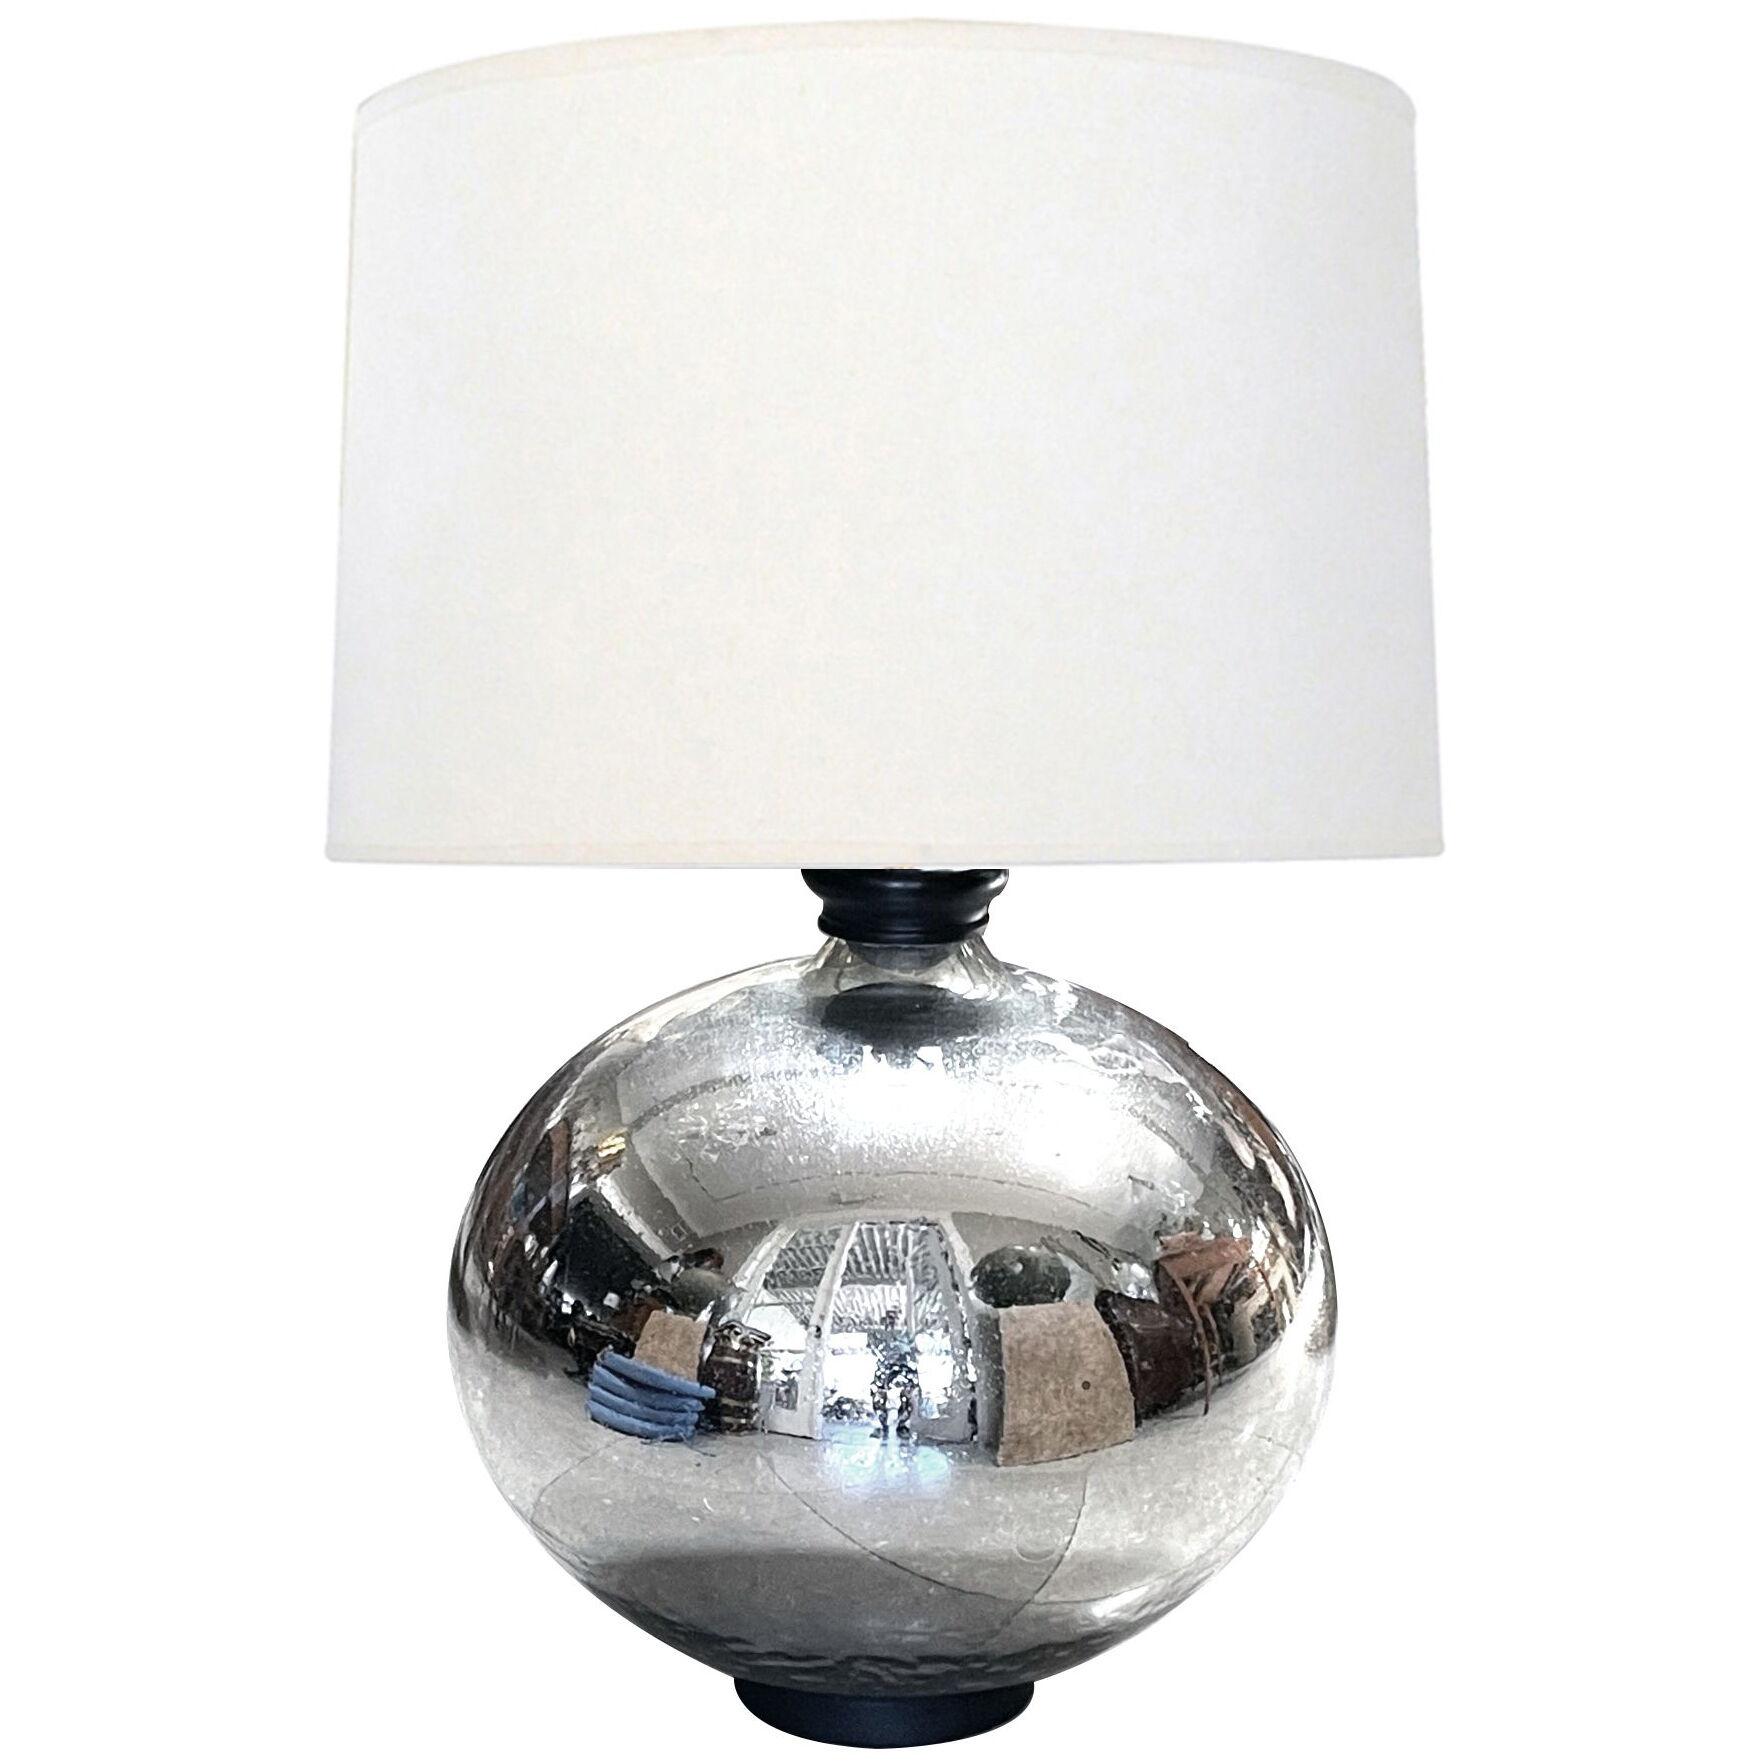 Massive mercury glass spheroid lamp